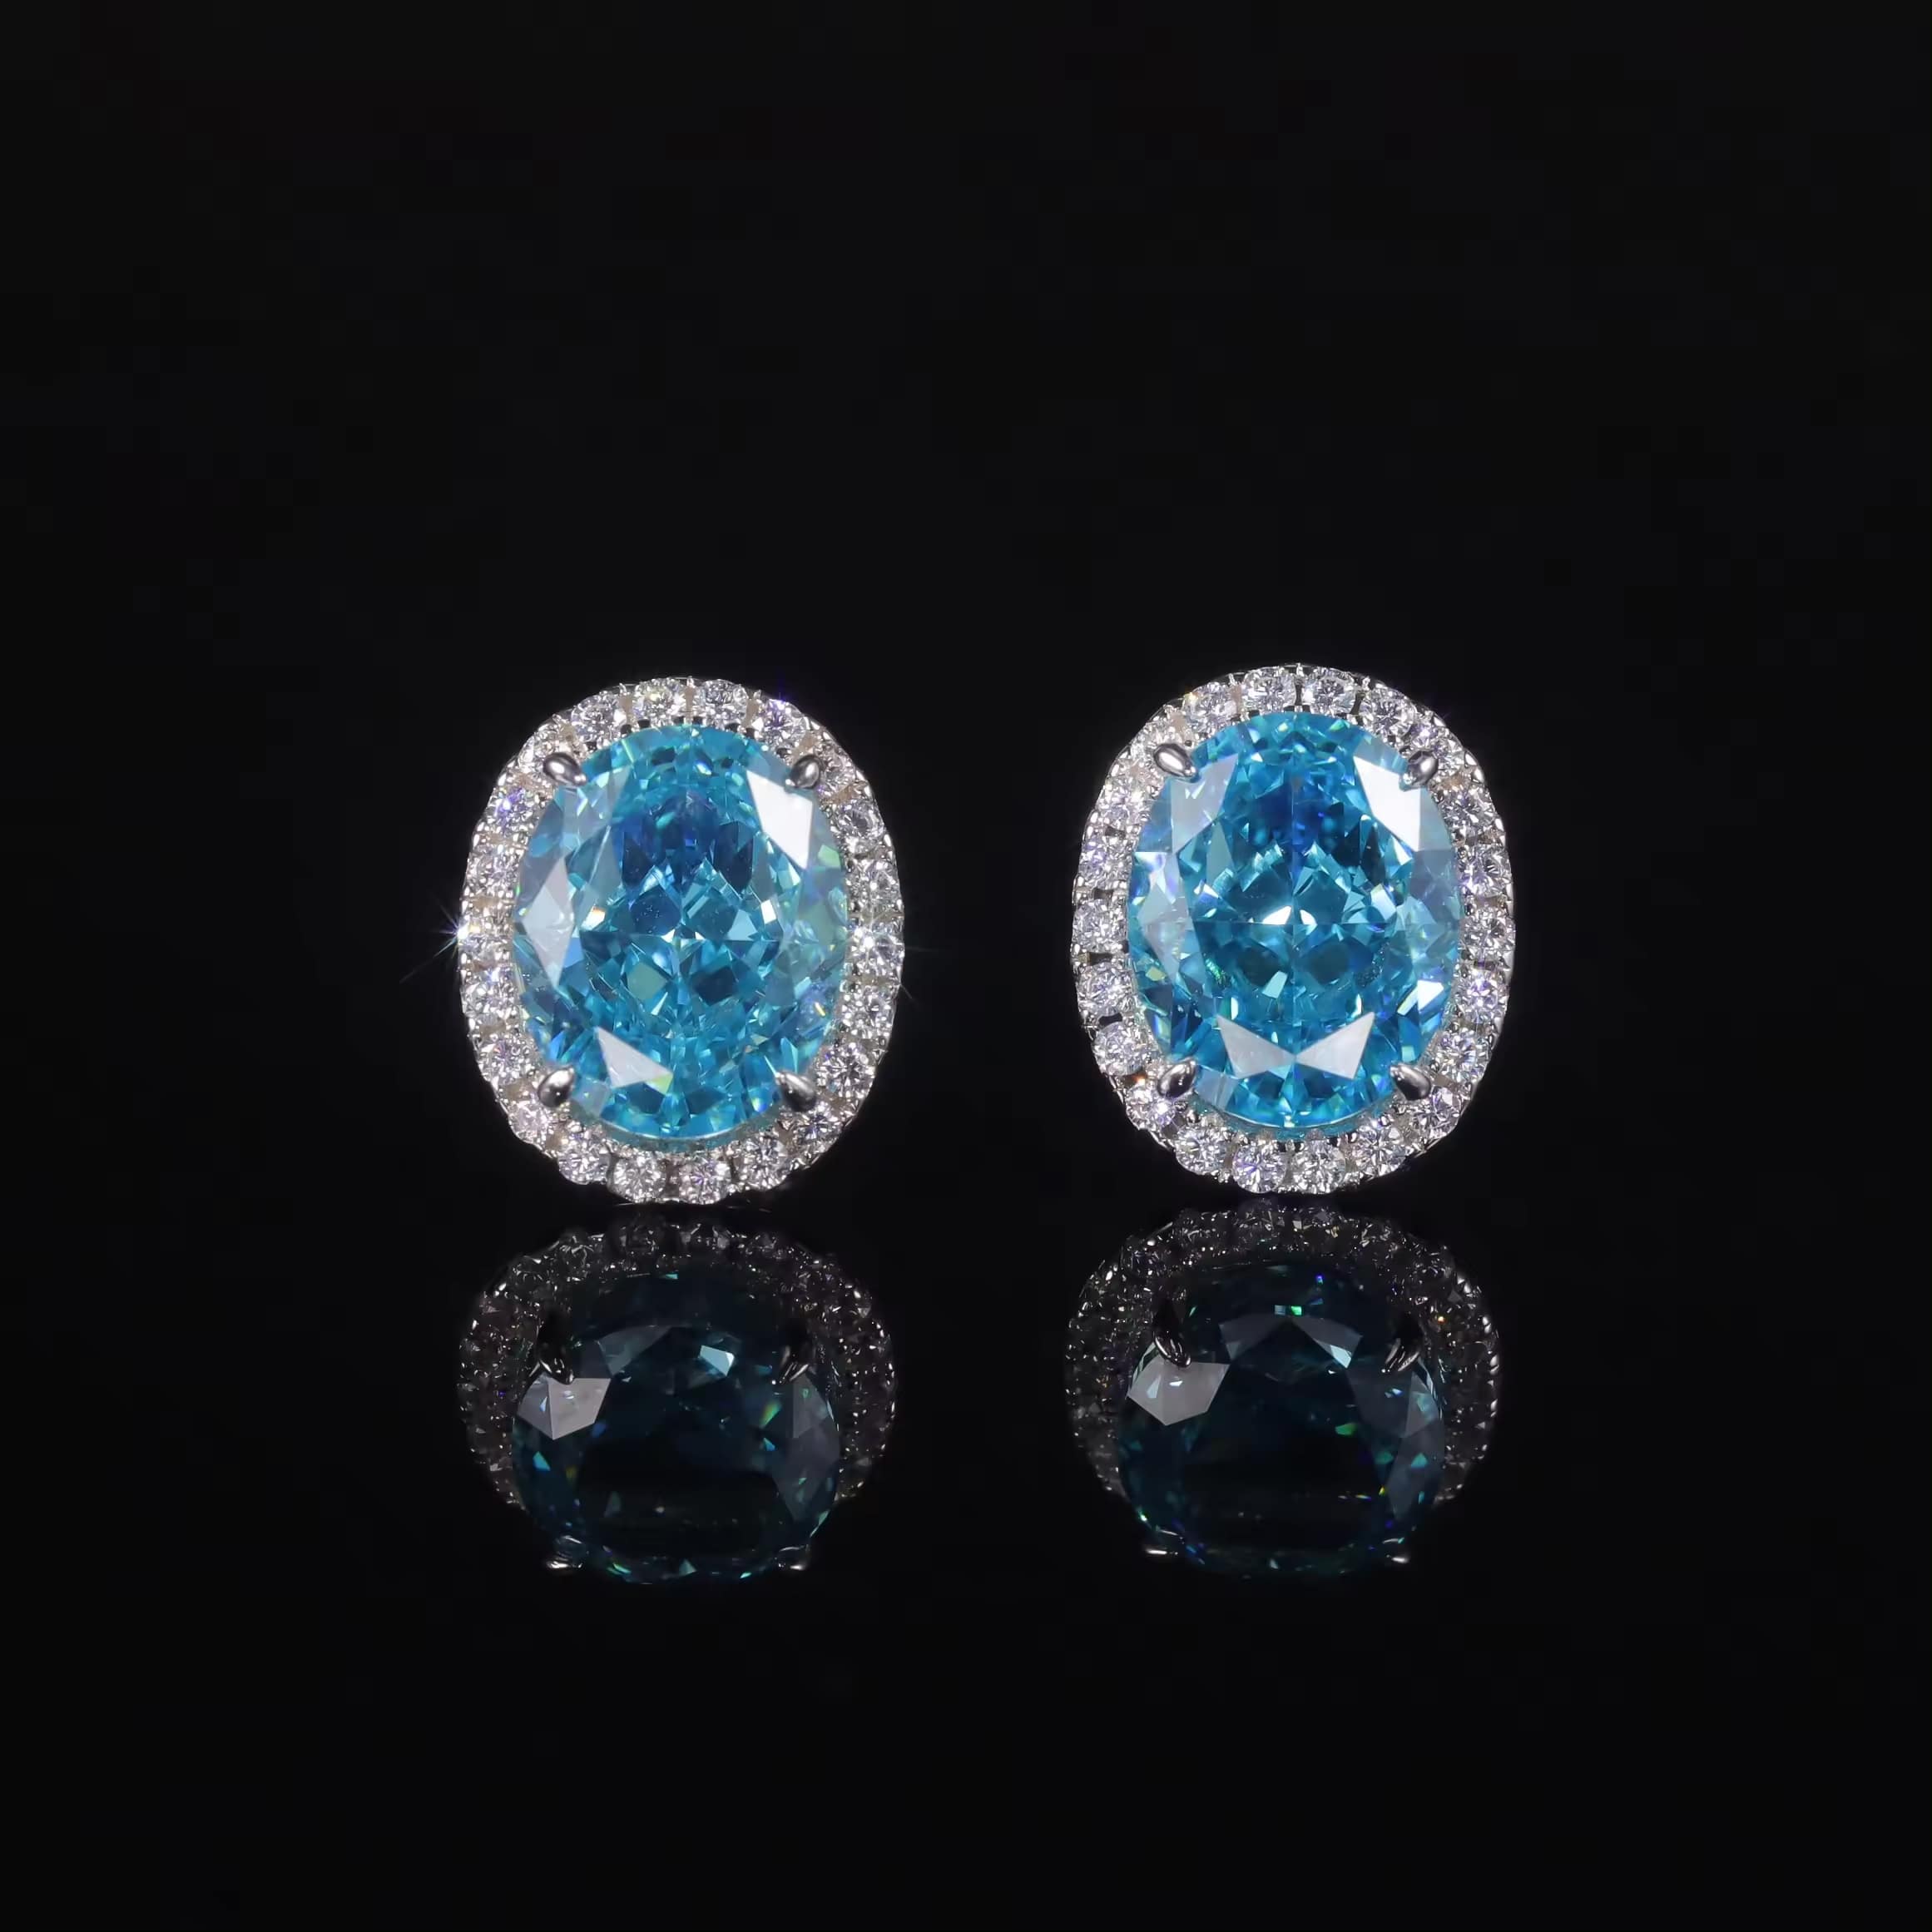 1.00 Carat Aquamarine Studs Diamond Earrings